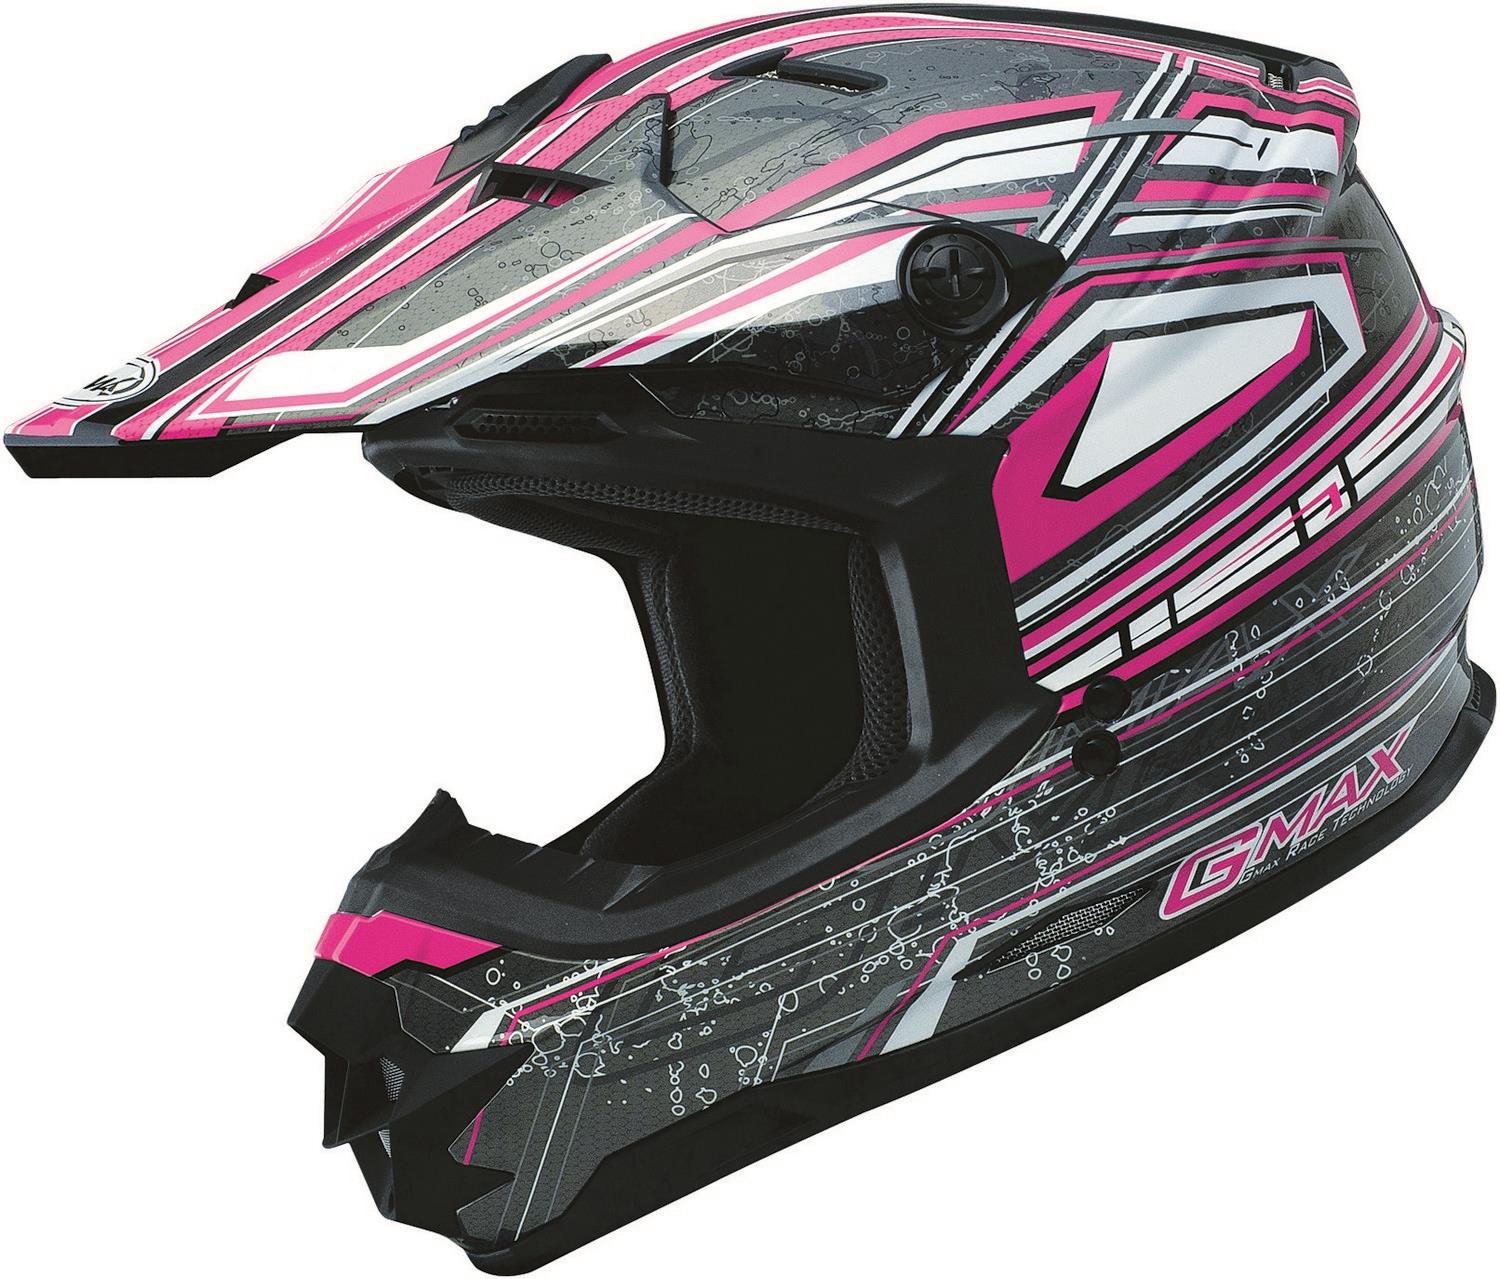 Gmax GM76X Bio MX/Offroad Helmet Pink/White/Black SM